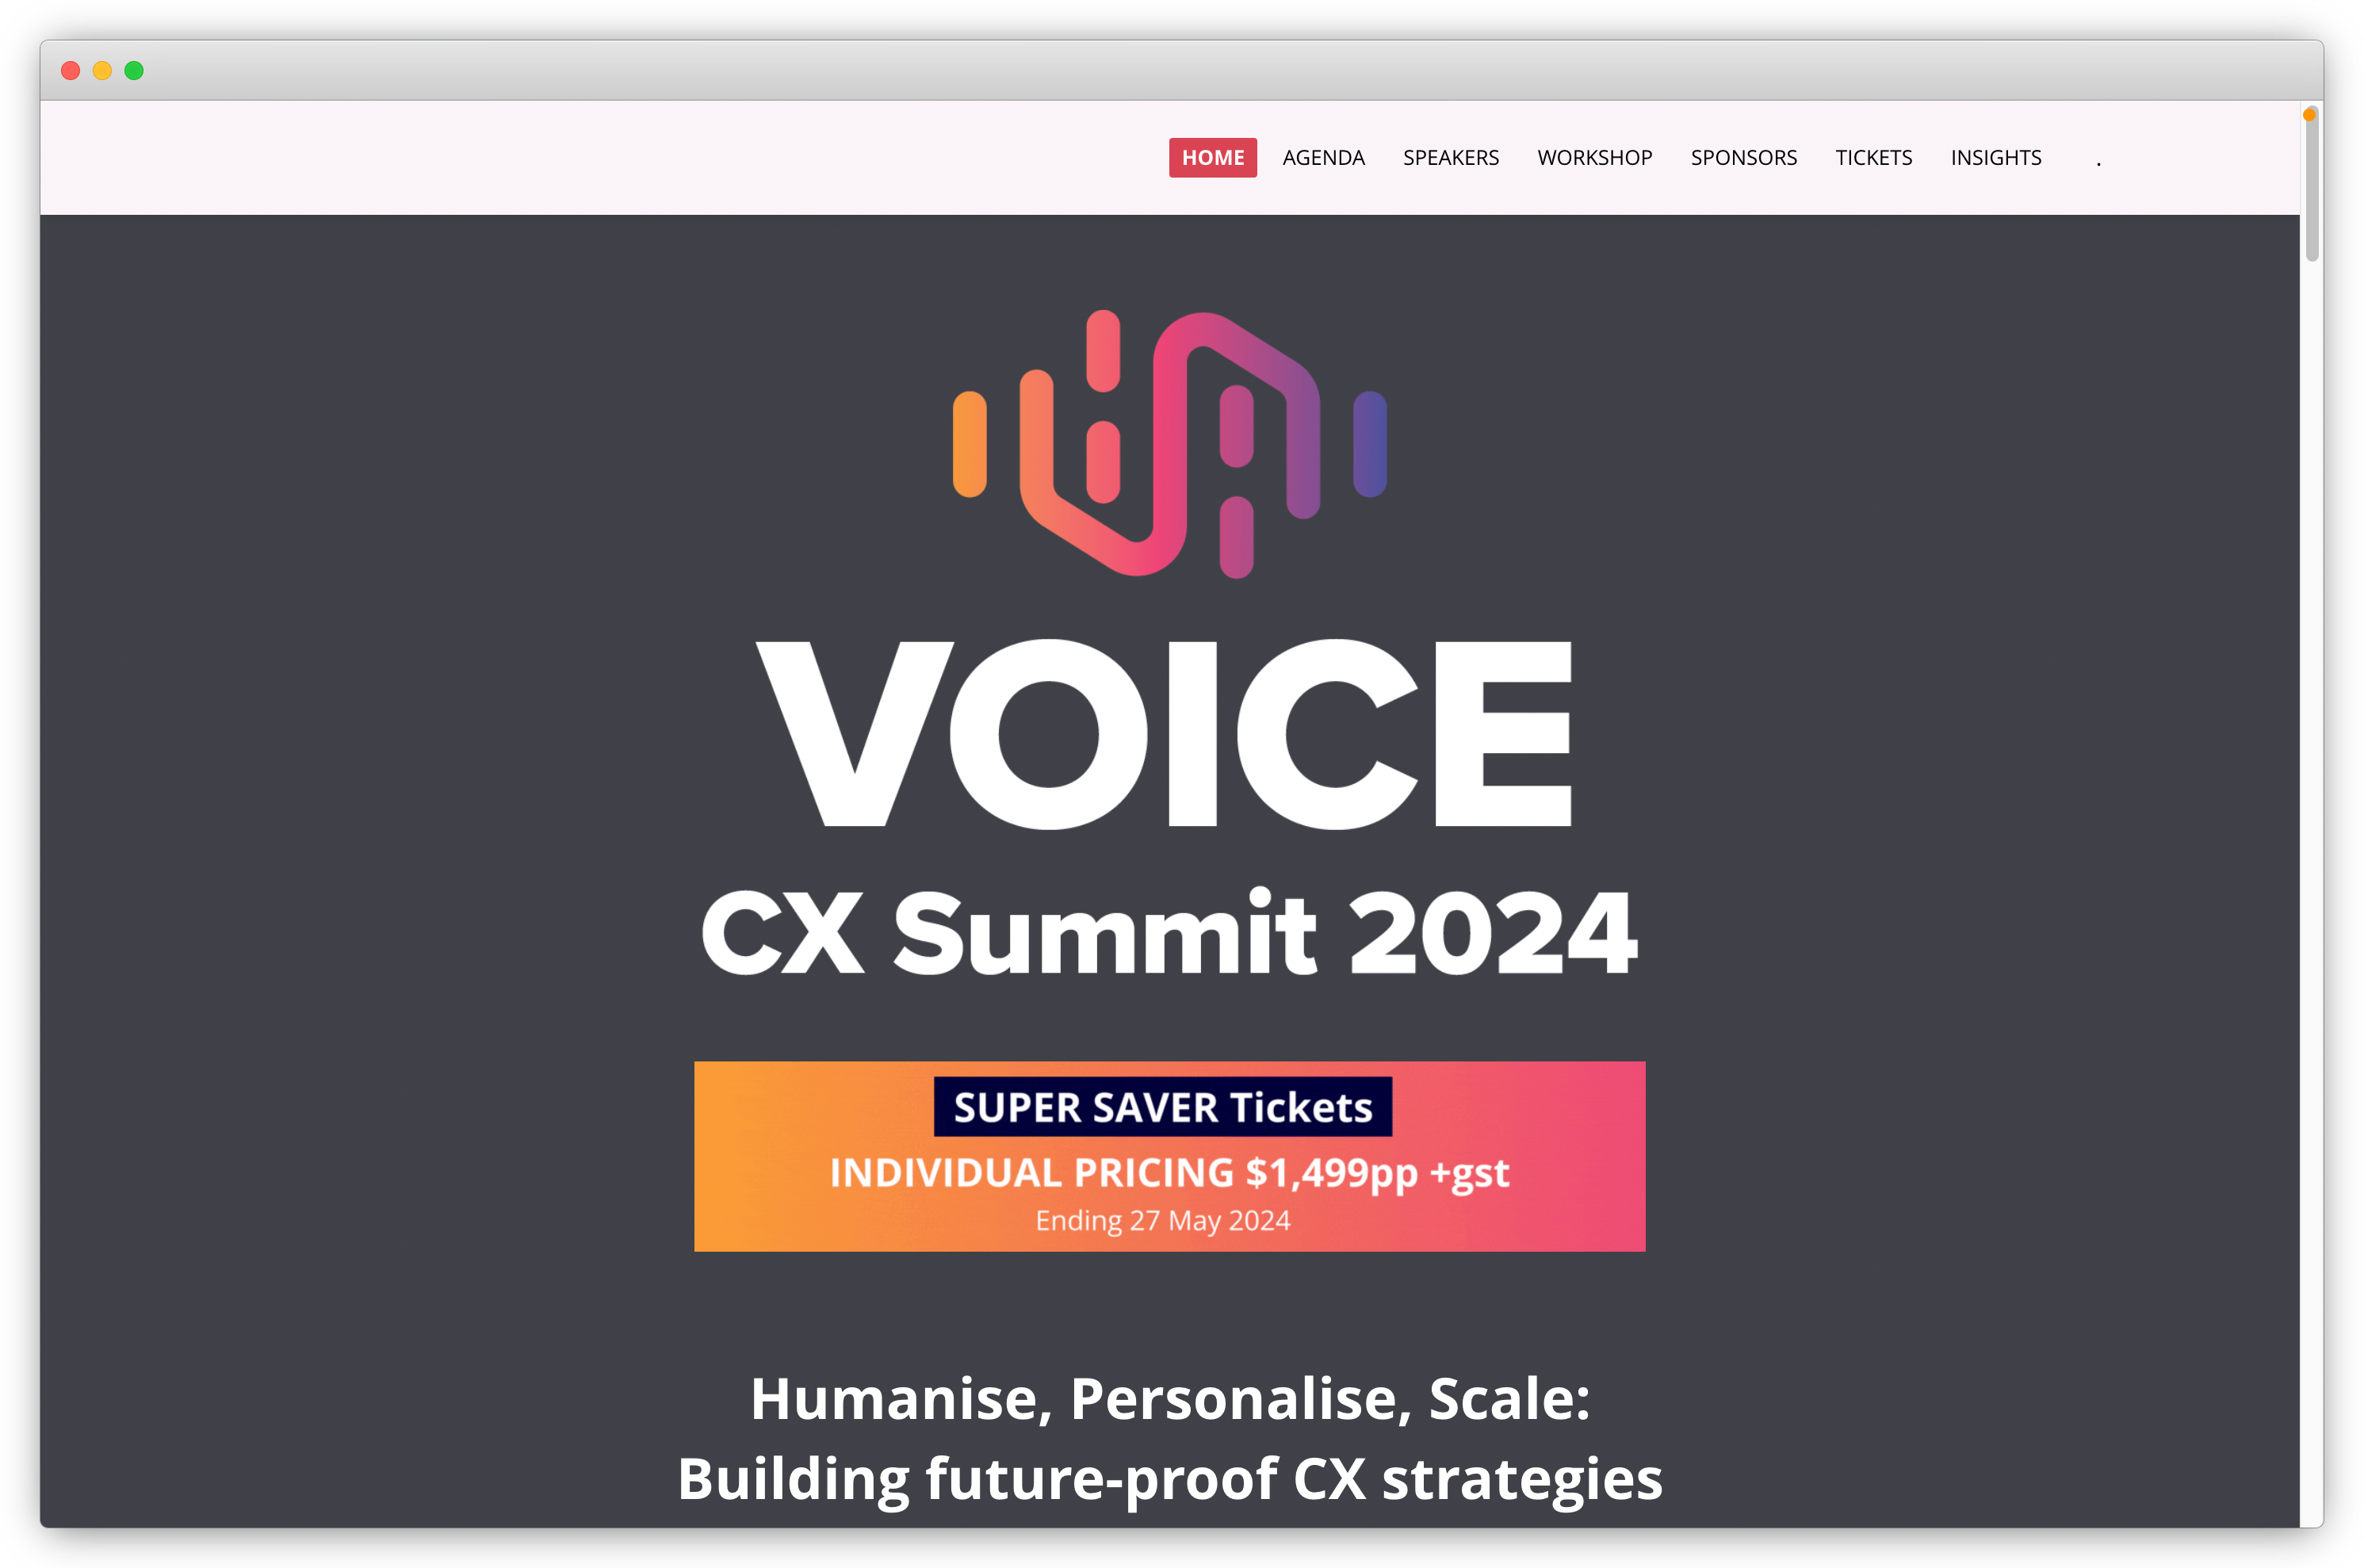 CX Events 2024 - Voice CX Summit 2024